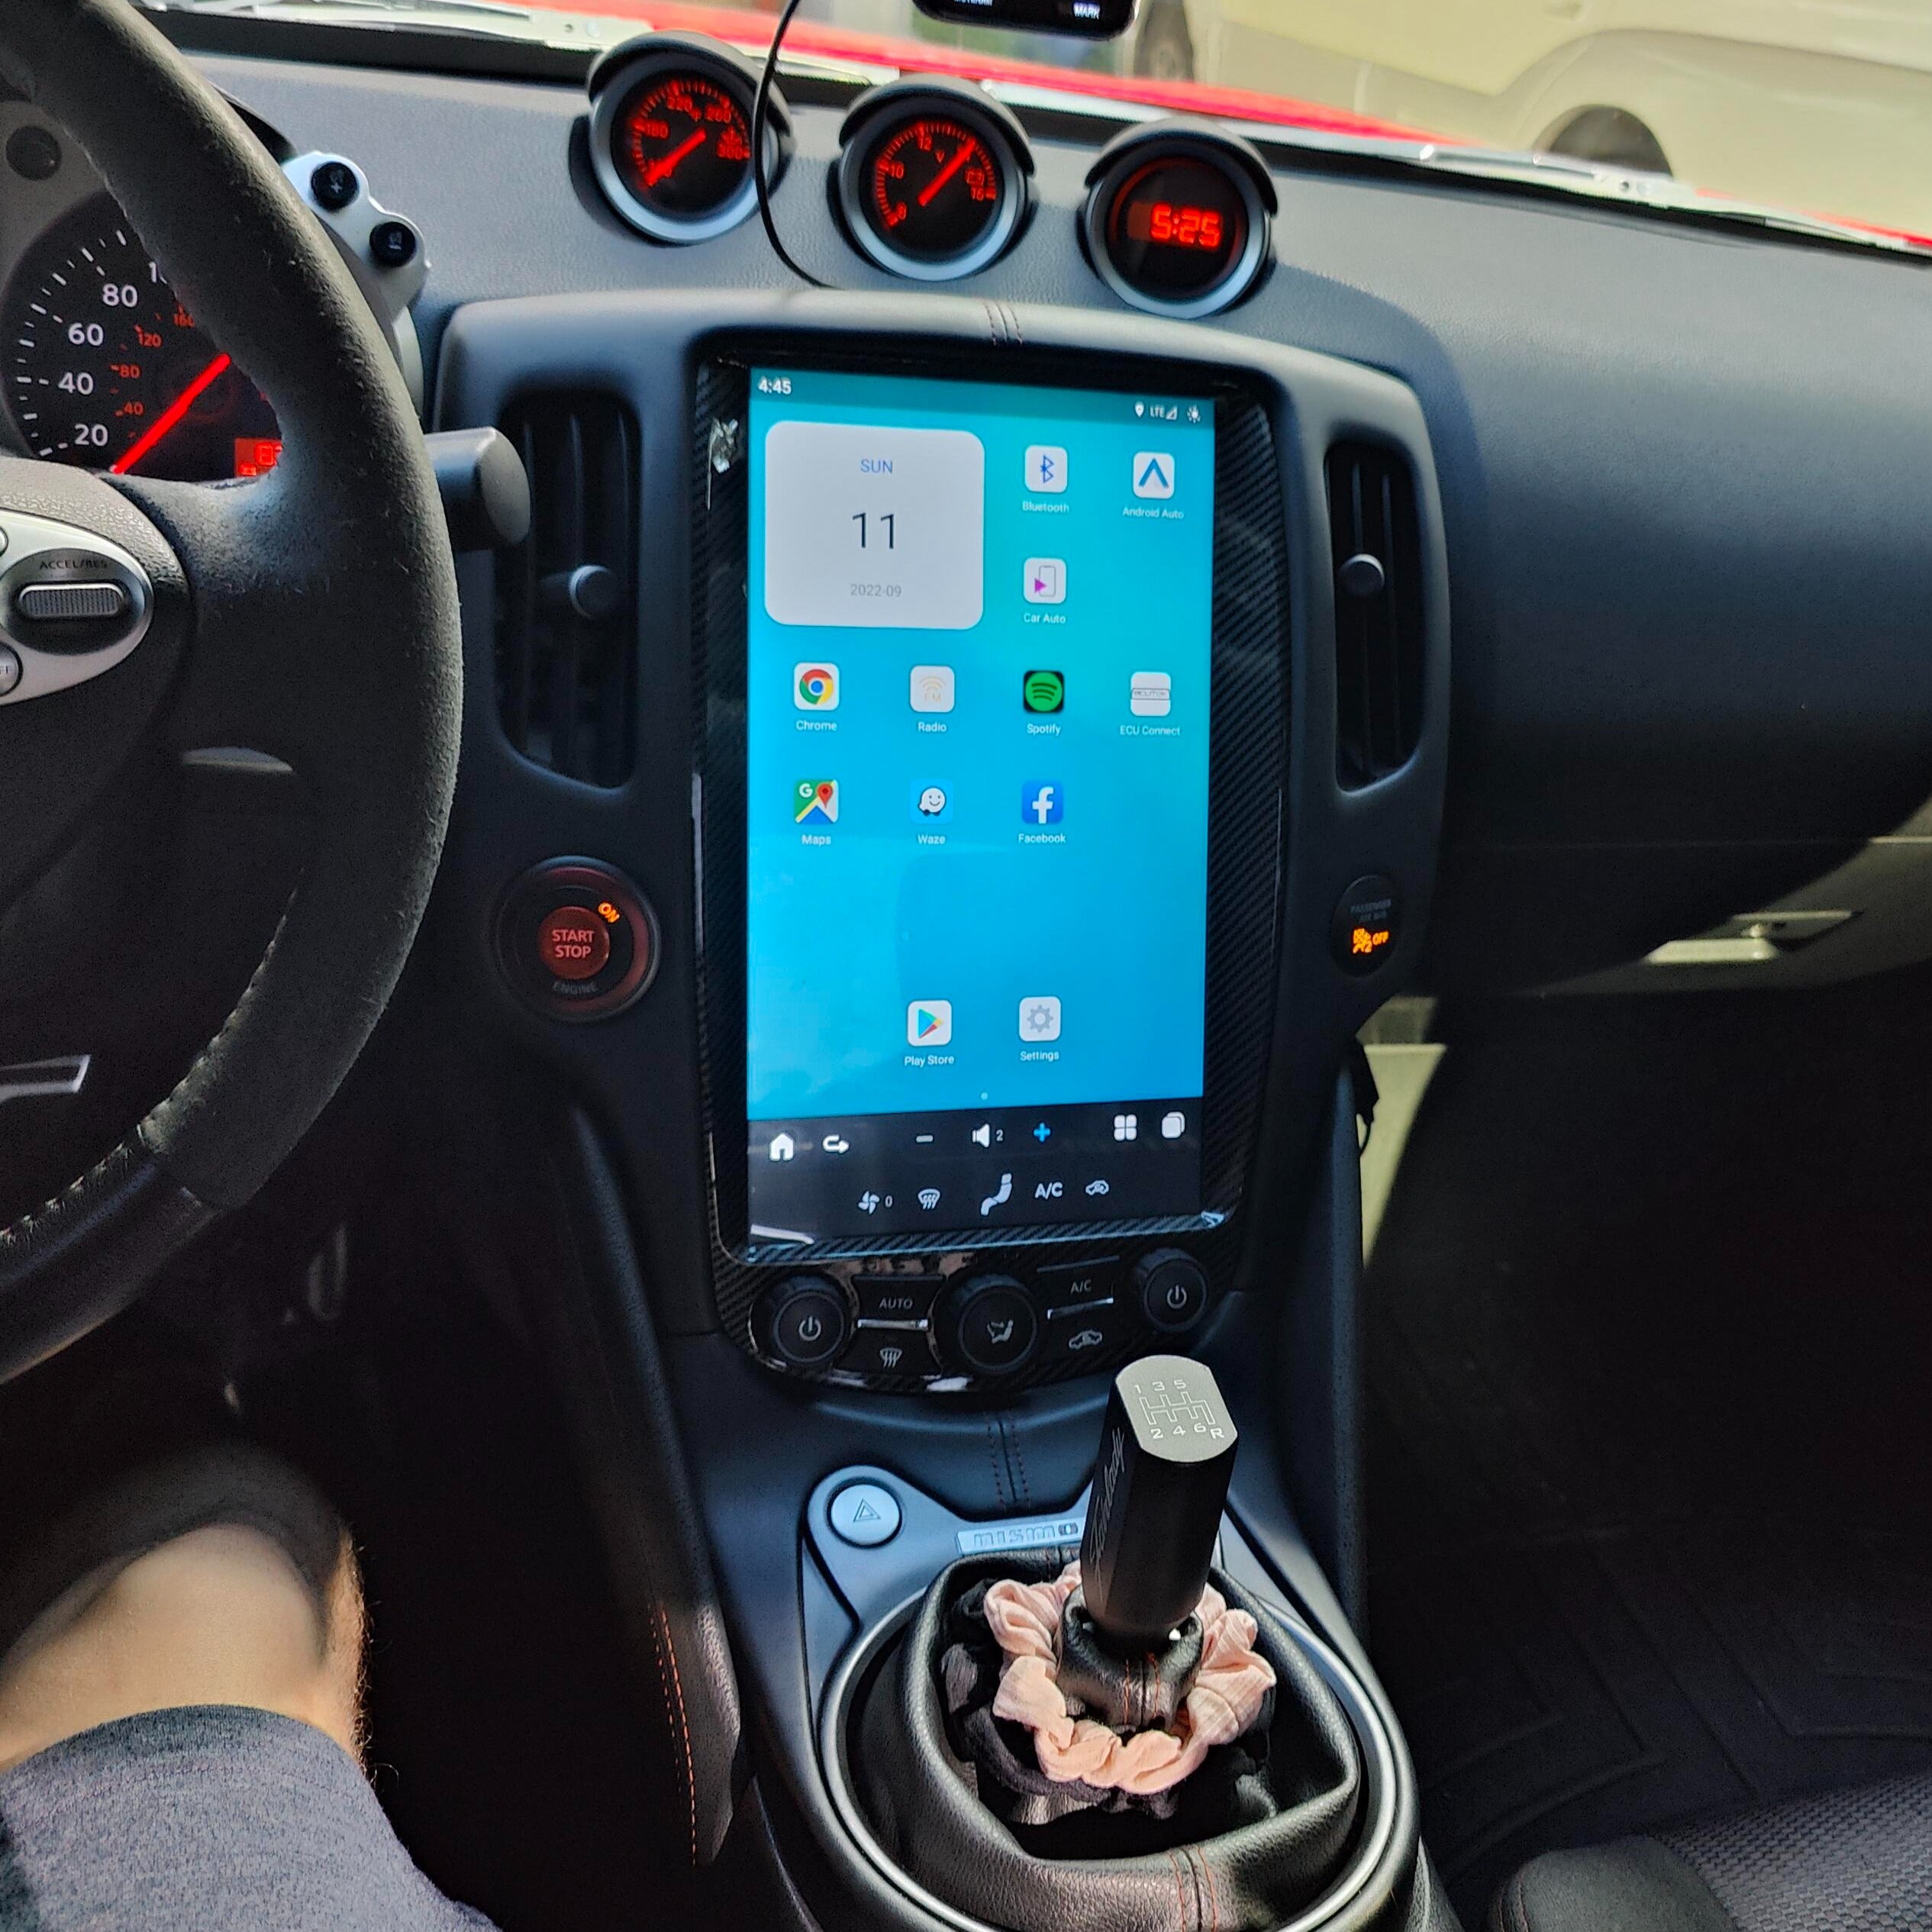 Nissan 370Z Tesla Carplay Screen